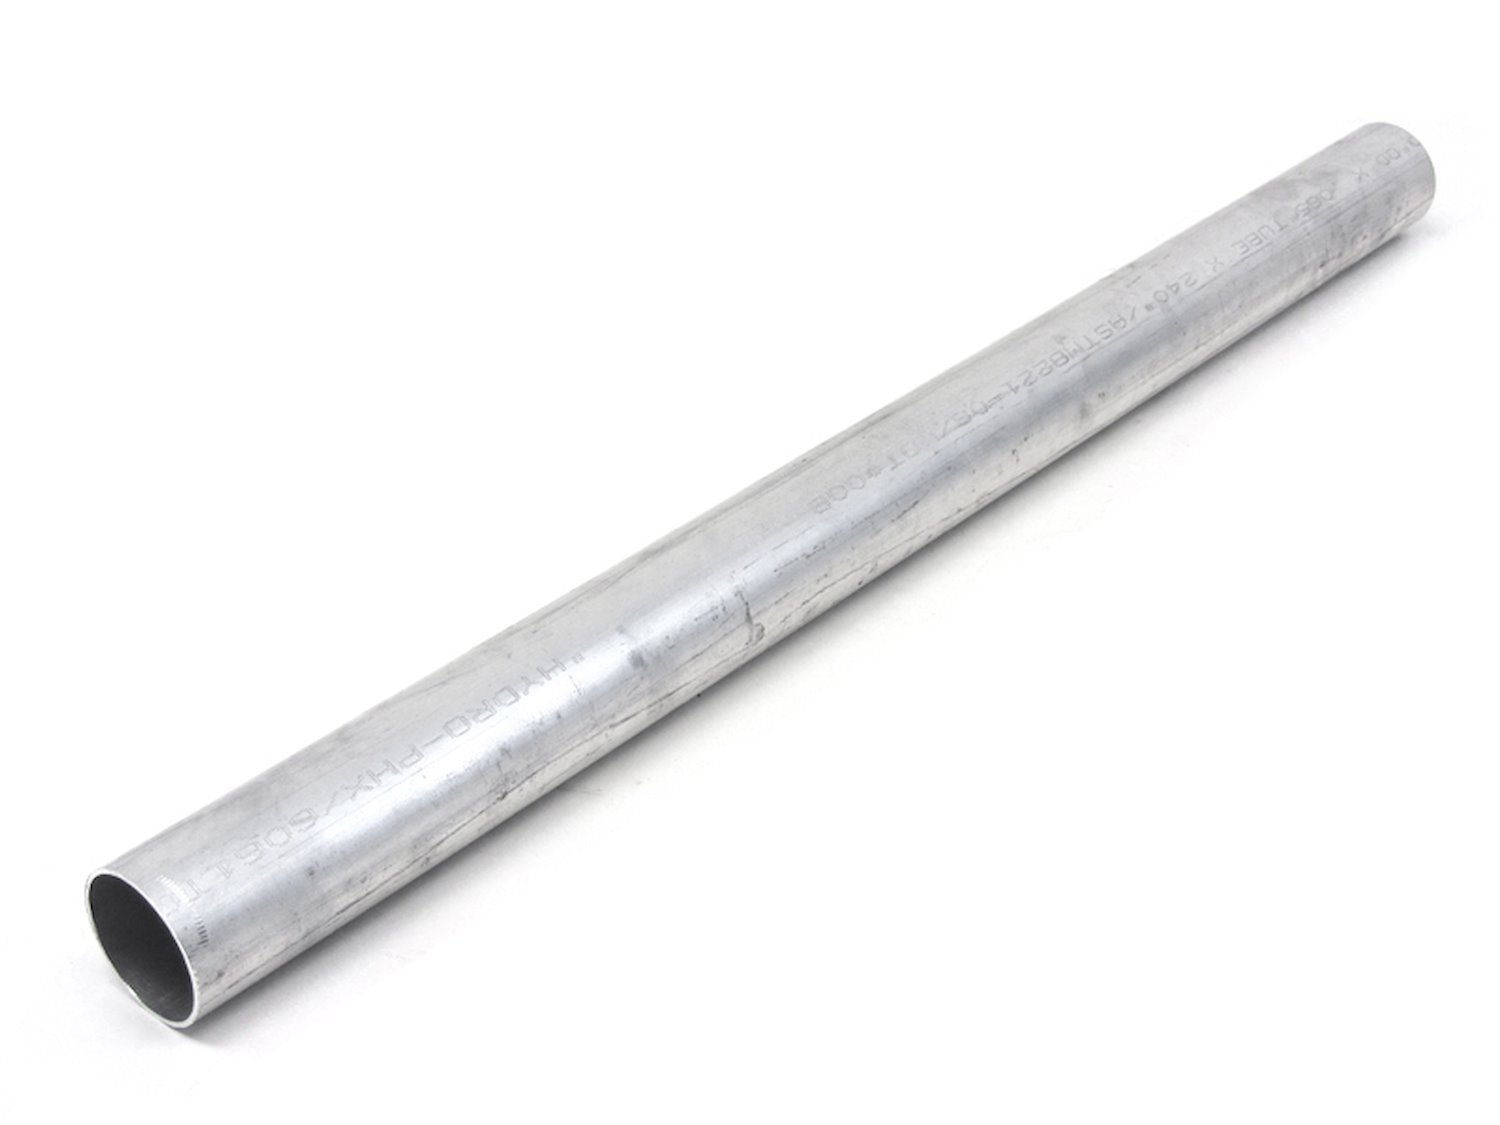 AST-3F-100 Aluminum Tubing, 6061 Aluminum, Straight Tubing, 1 in. OD, Seamless, Raw Finish, 3 ft. Long